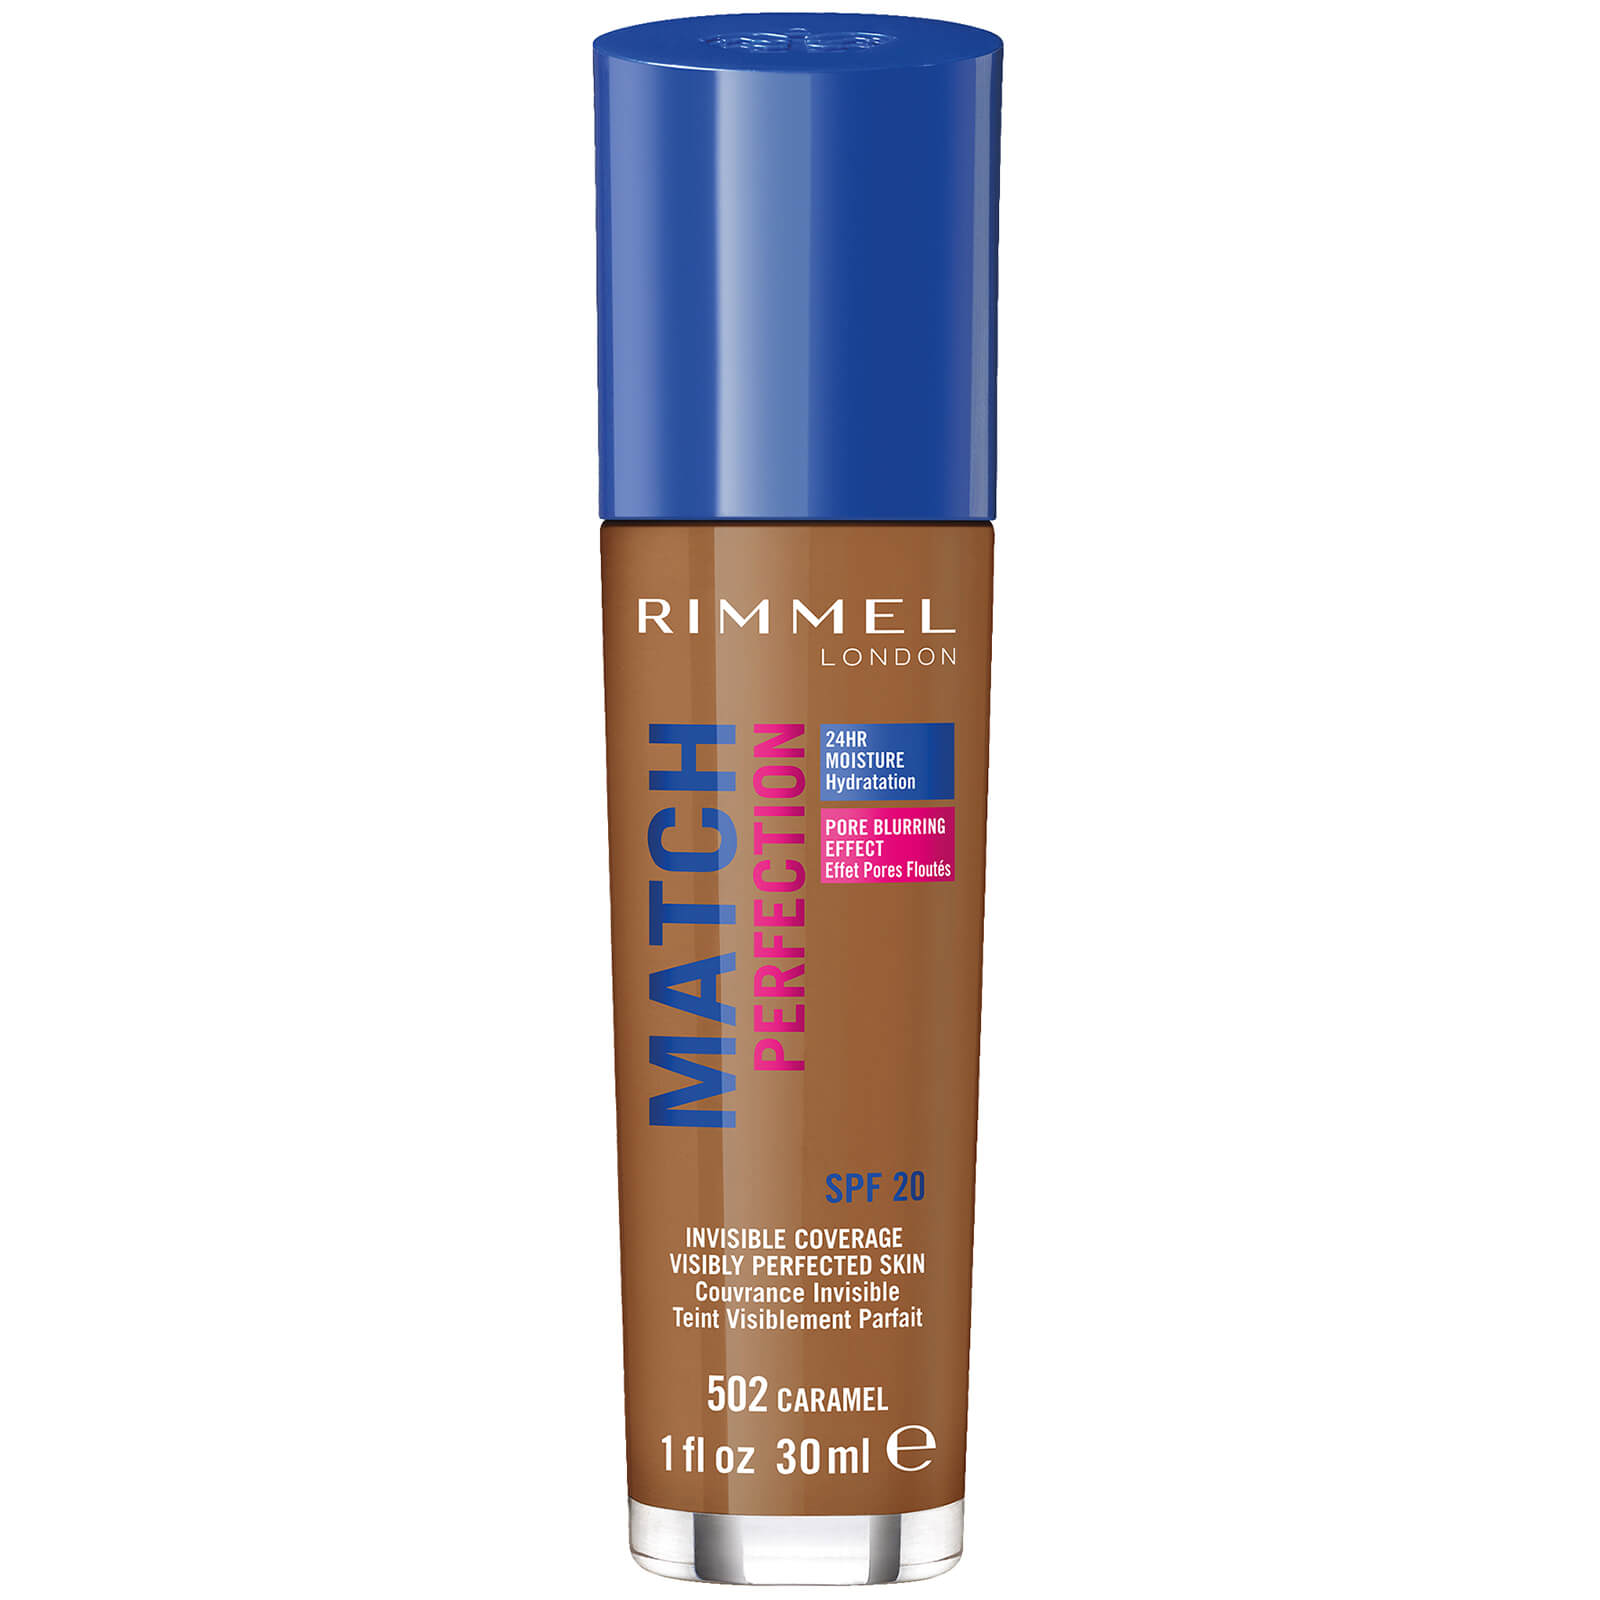 Image of Rimmel fondotinta Match Perfection 30 ml (varie tonalità) - Caramel